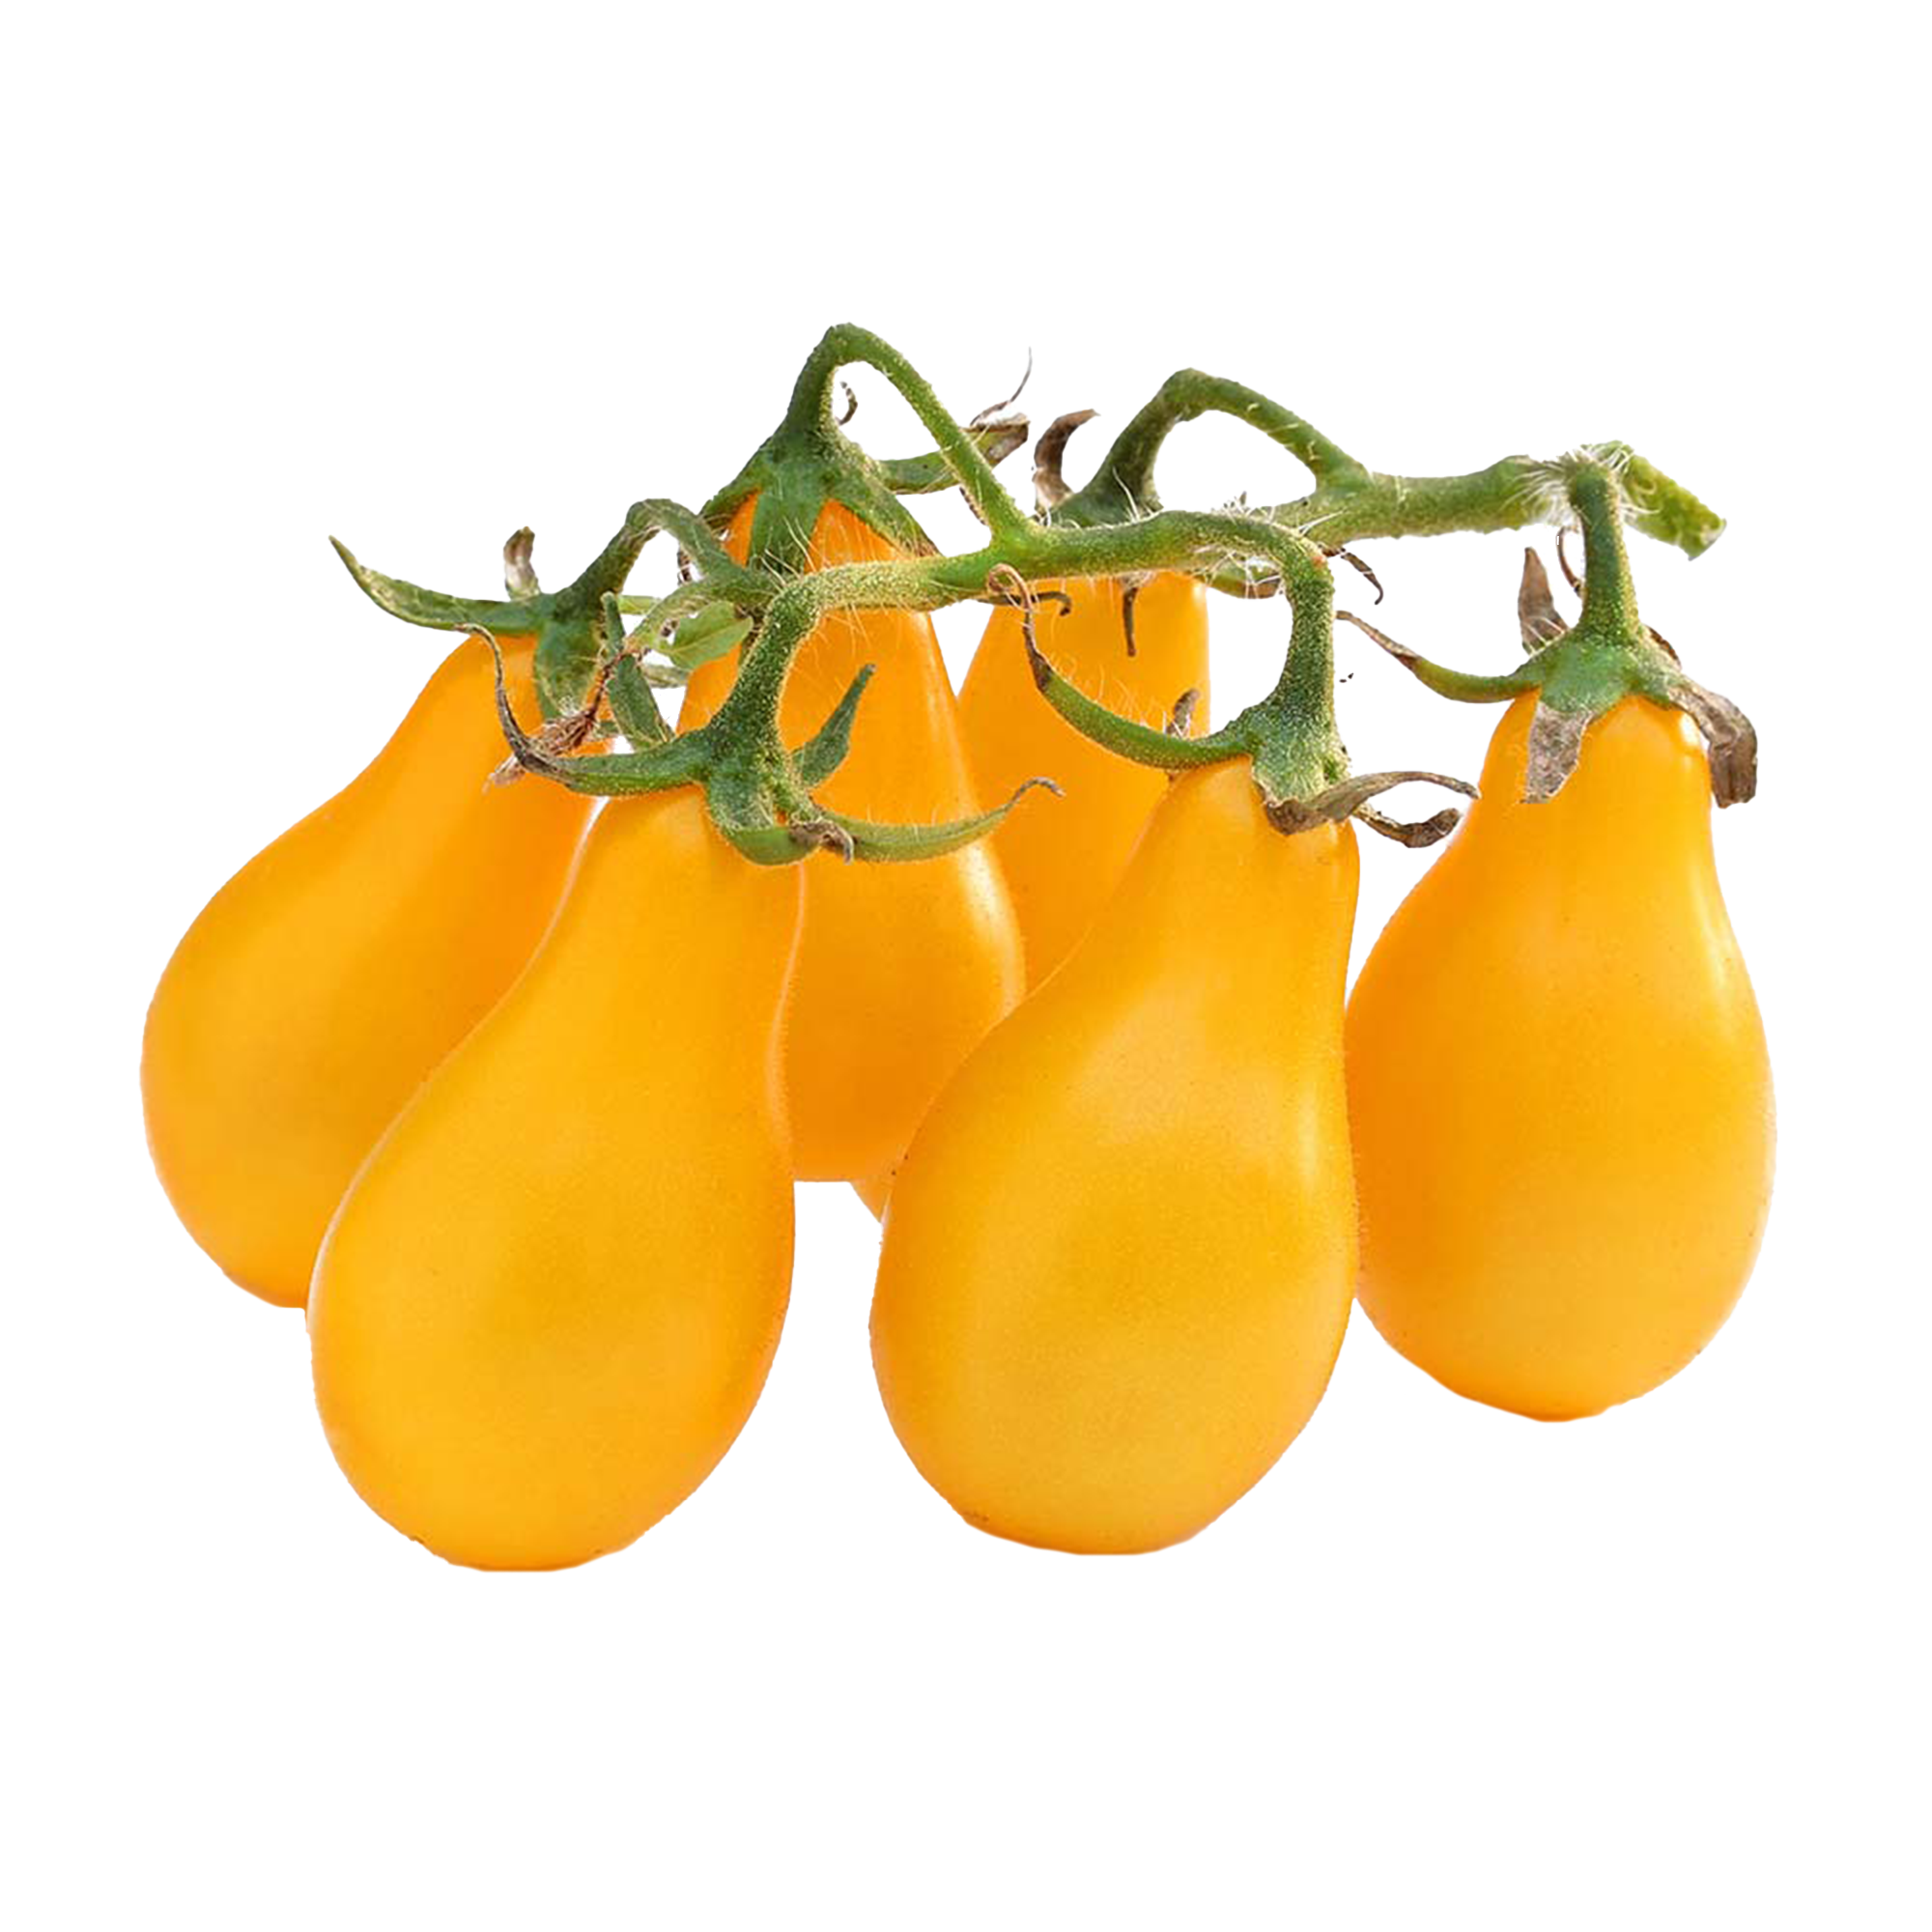 Tomatenpflanzen "Yellow Pearshaped"